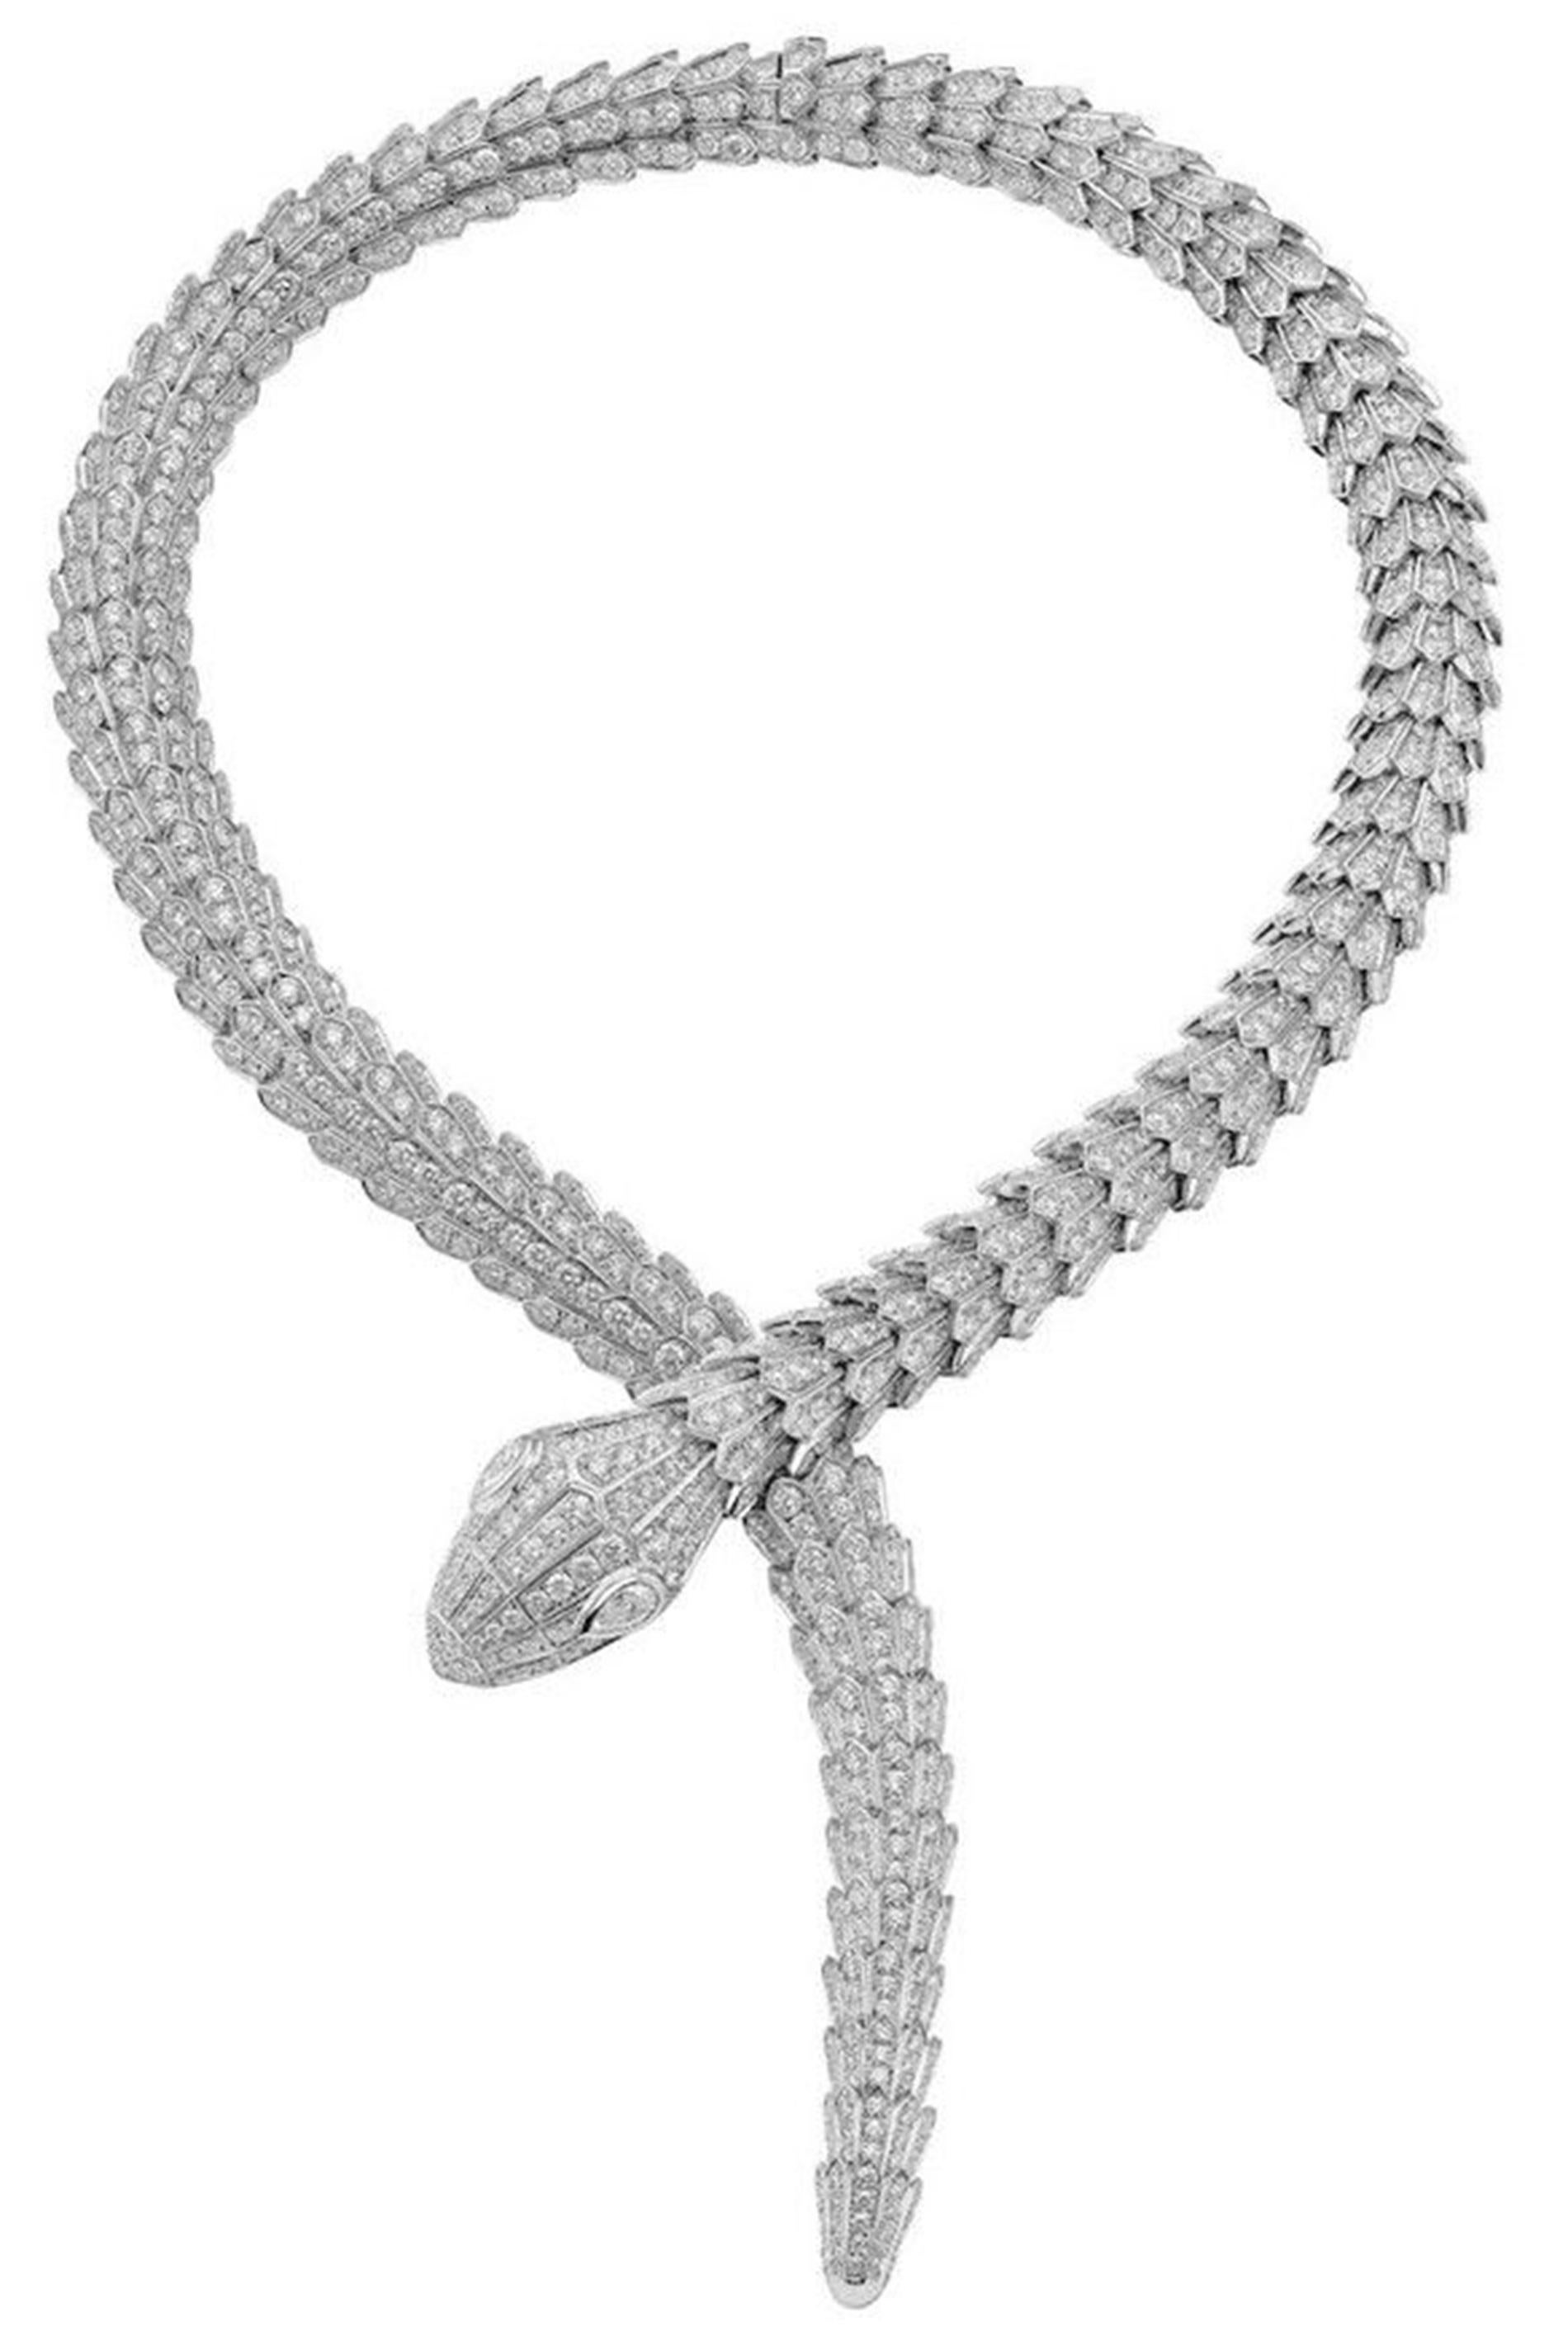 bulgari serpenti necklace price